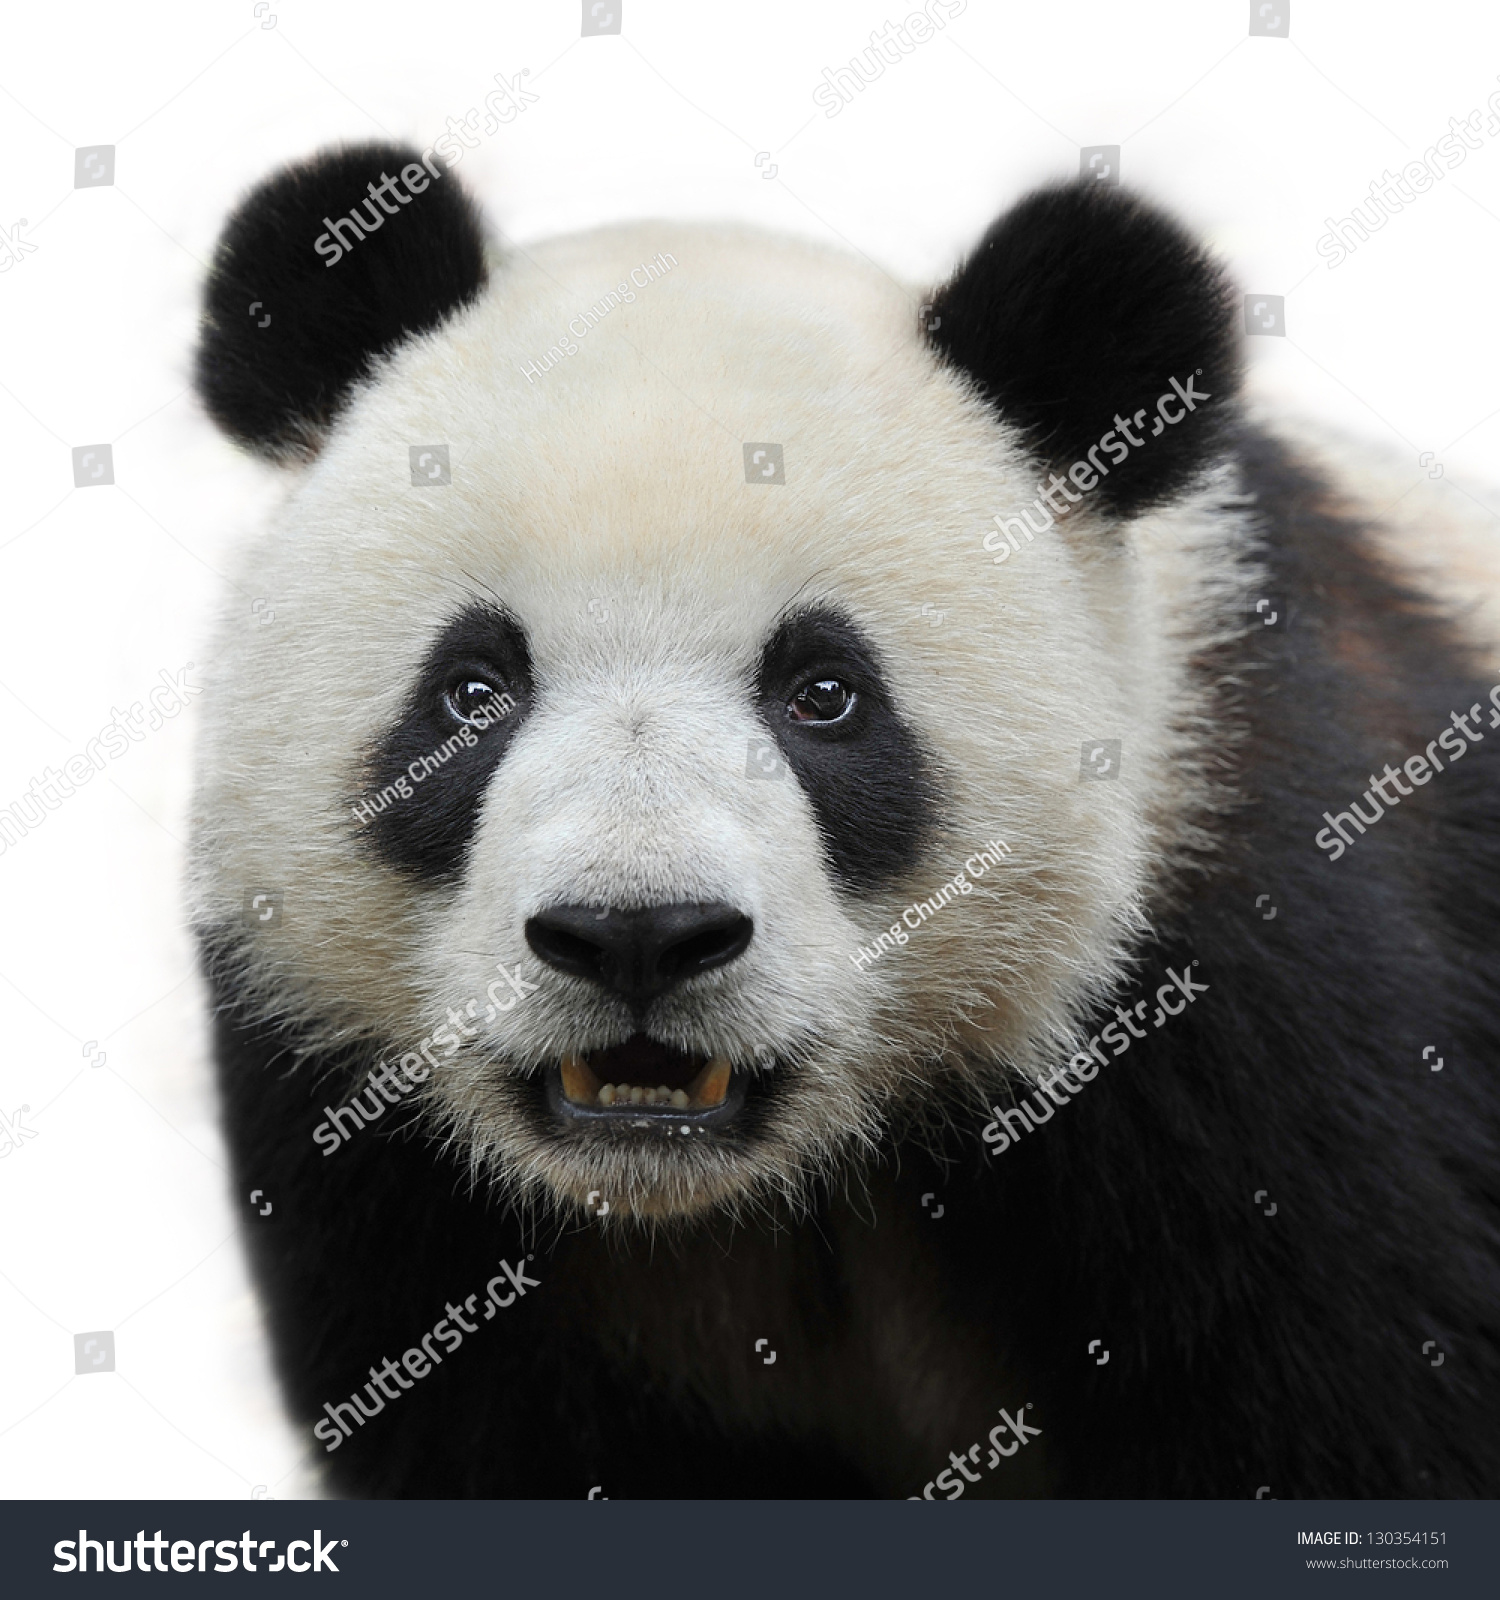 Closeup Panda Bear Isolated On White Stock Photo 130354151 Shutterstock